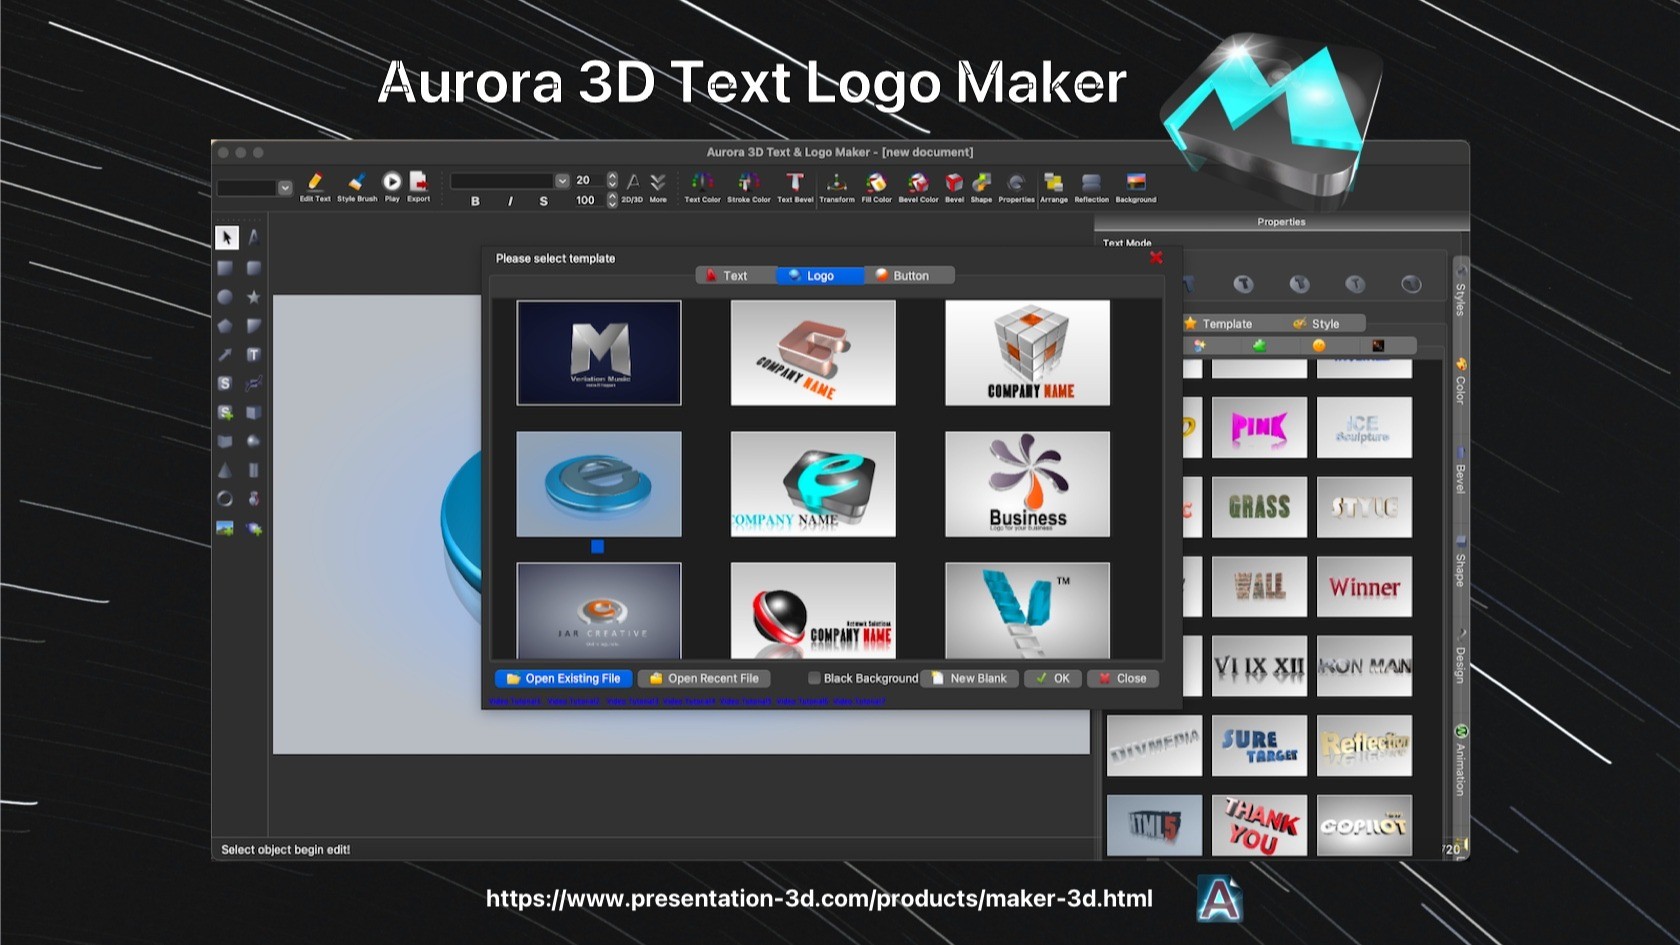 AppSumo Deal for Aurora 3D Text & Logo Maker